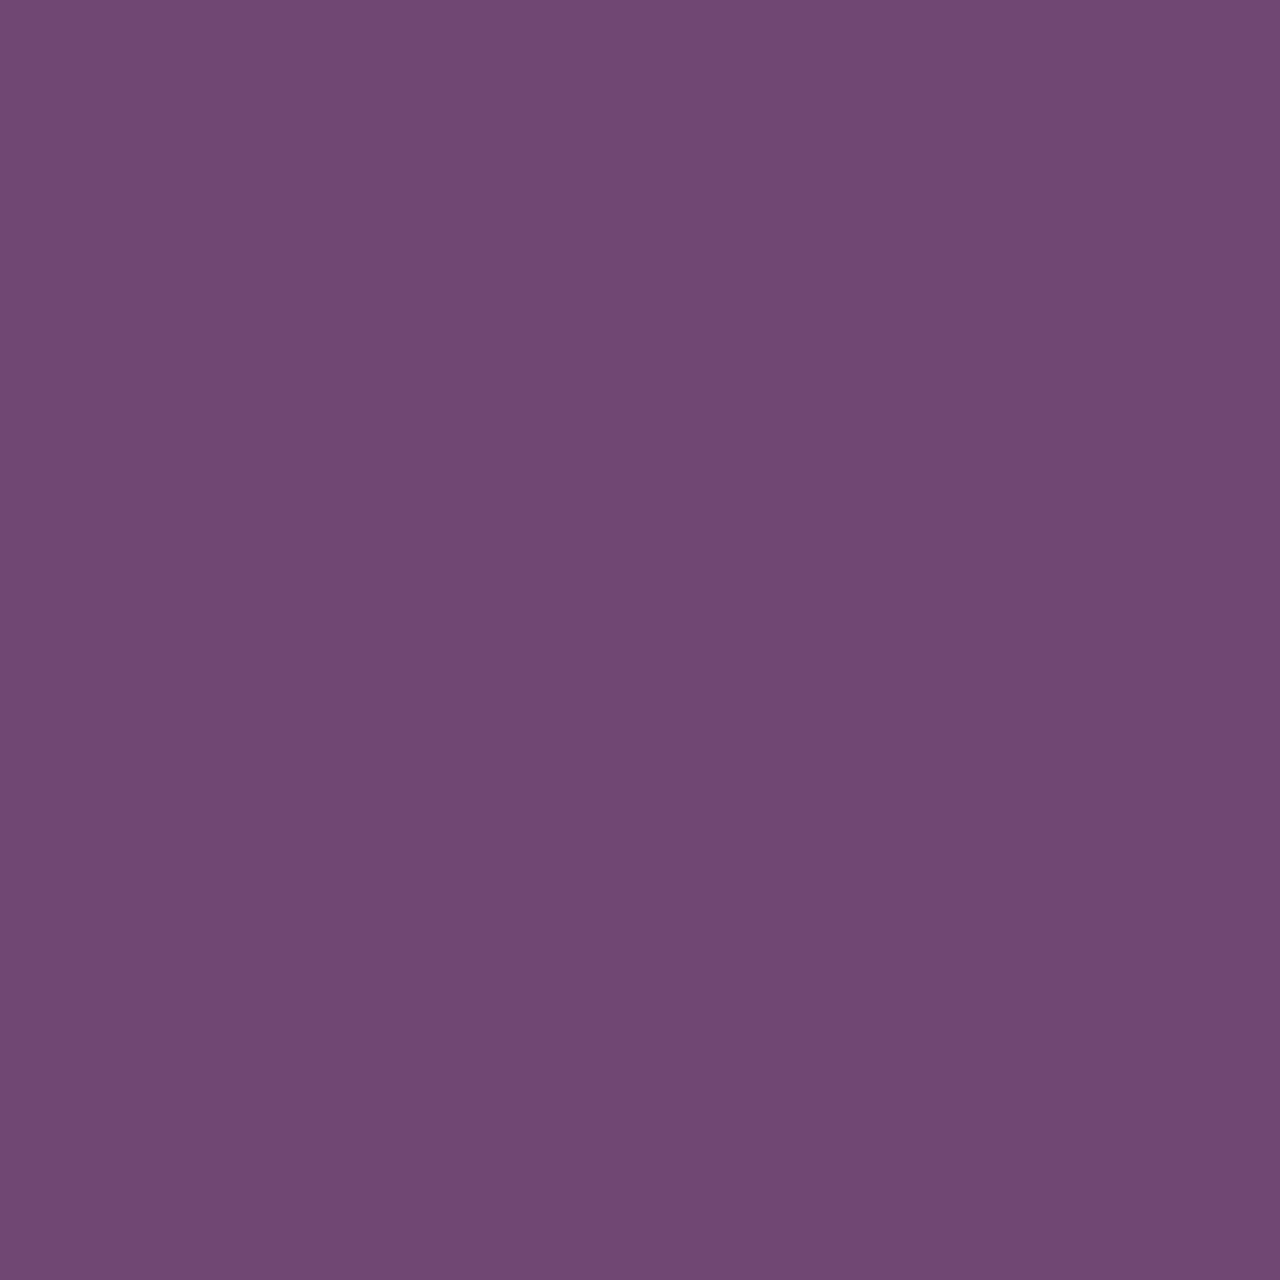 Purple 121-027 PBS Fabrics Painter's Palette Solids collection